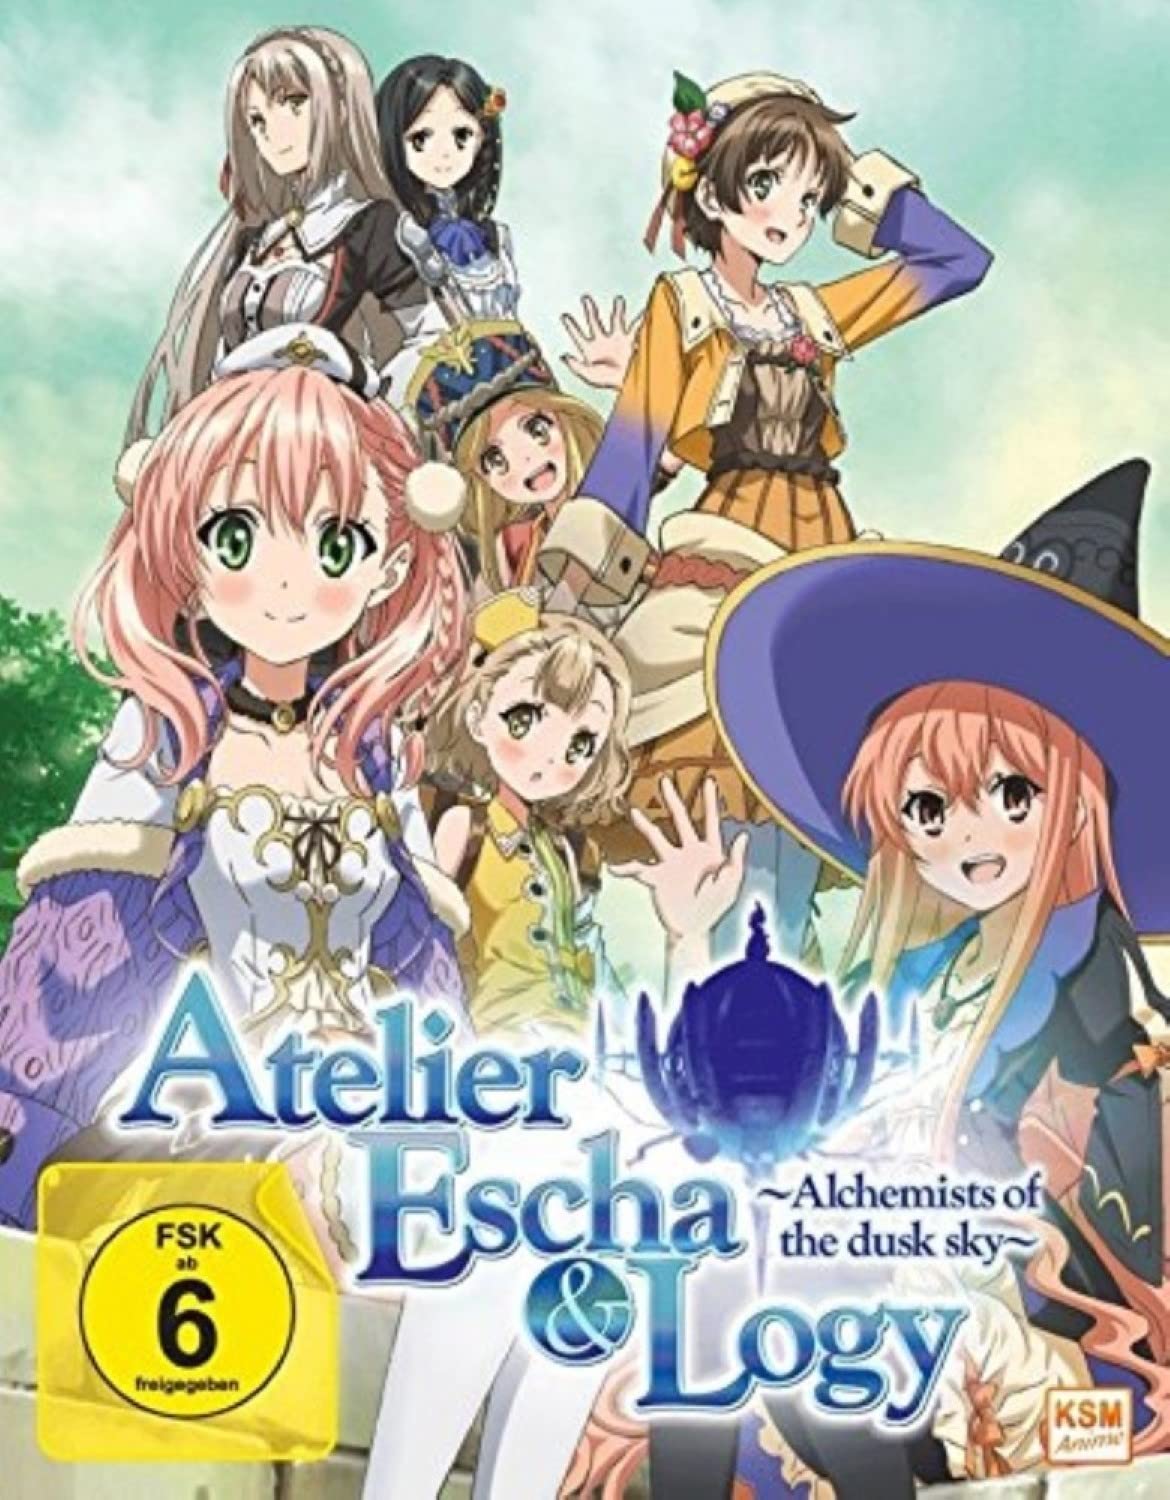 Atelier Escha & Logy - Alchemist of the Dusk Sky - Volume 1/Episode 01-04 im Sammelschuber [Blu-ray]